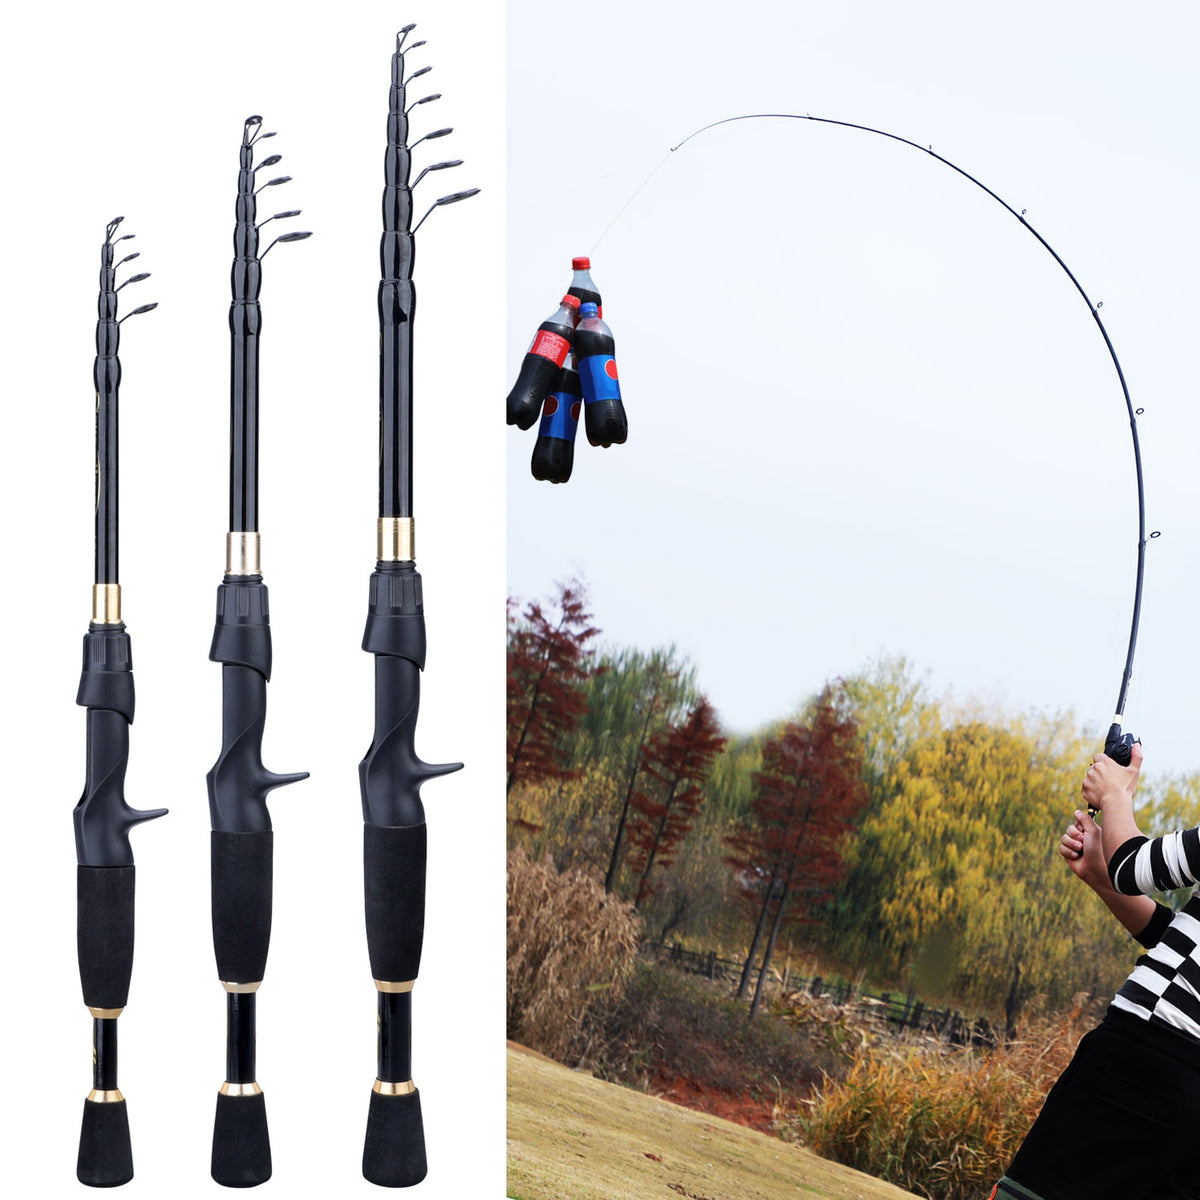 Sougayilang Telescopic Fishing Rod Ultralight Weight Spinning/Casting  Fishing Rod Carbon Fiber 1.8-2.4m Fishing Rod Tackle Pesca